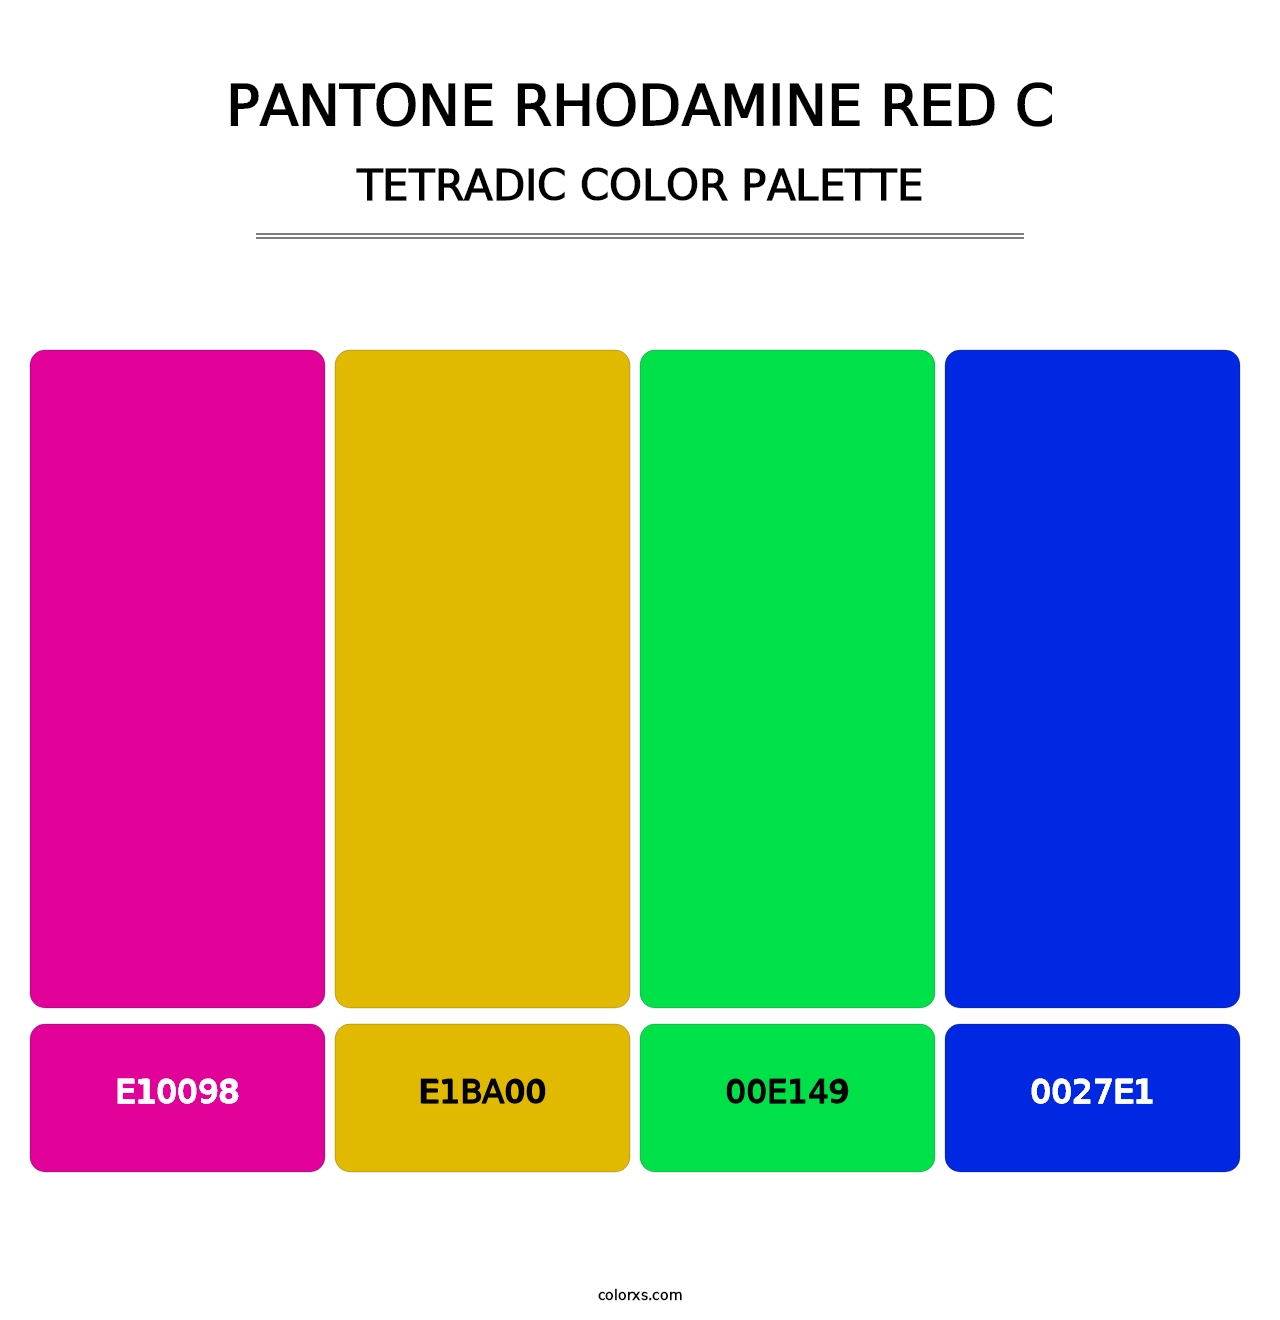 PANTONE Rhodamine Red C - Tetradic Color Palette